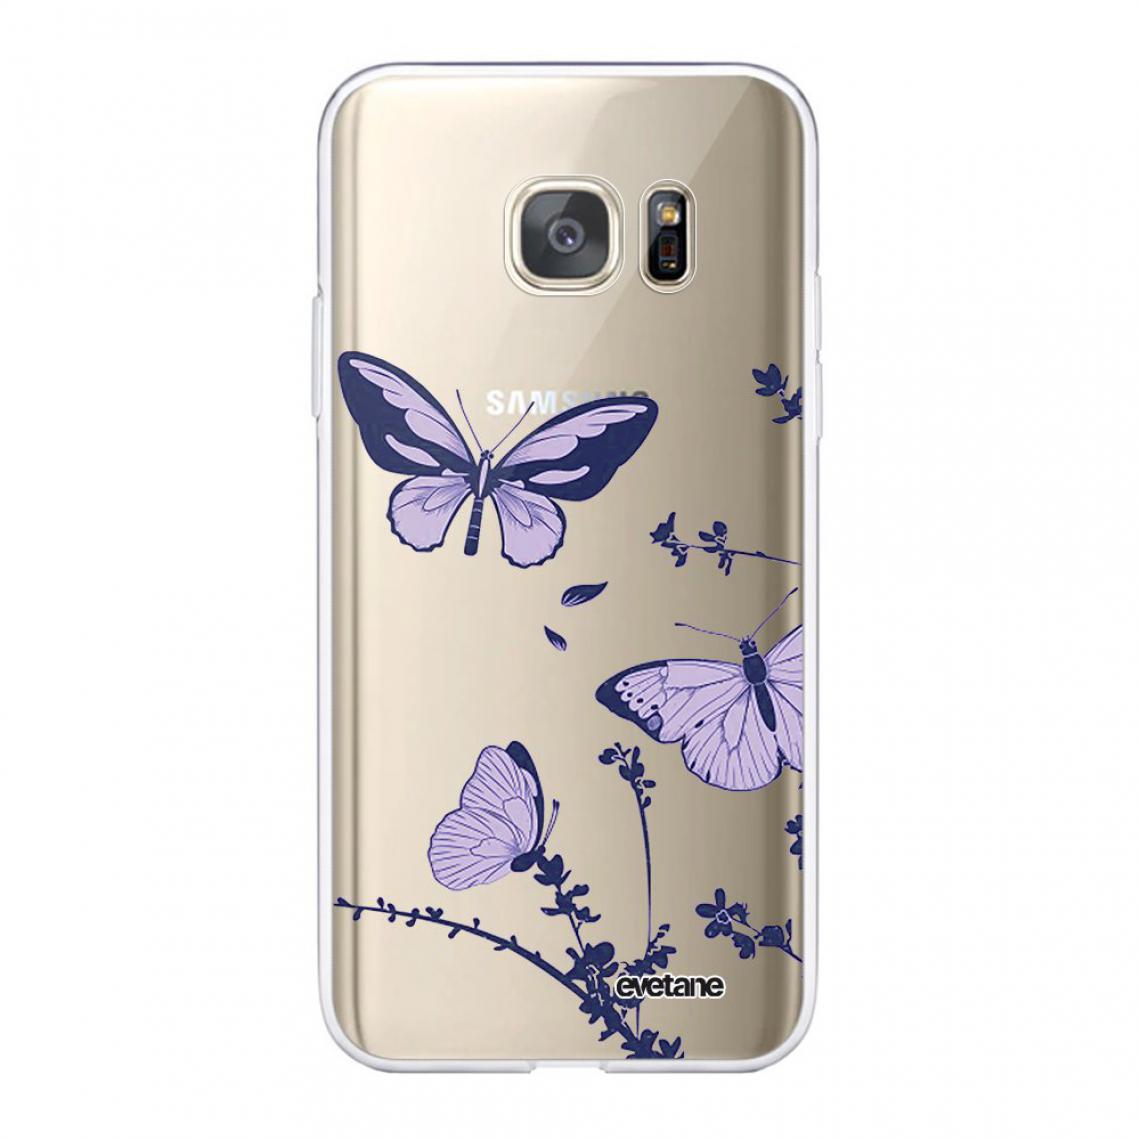 Evetane - Coque Samsung Galaxy S7 360 intégrale avant arrière transparente - Coque, étui smartphone